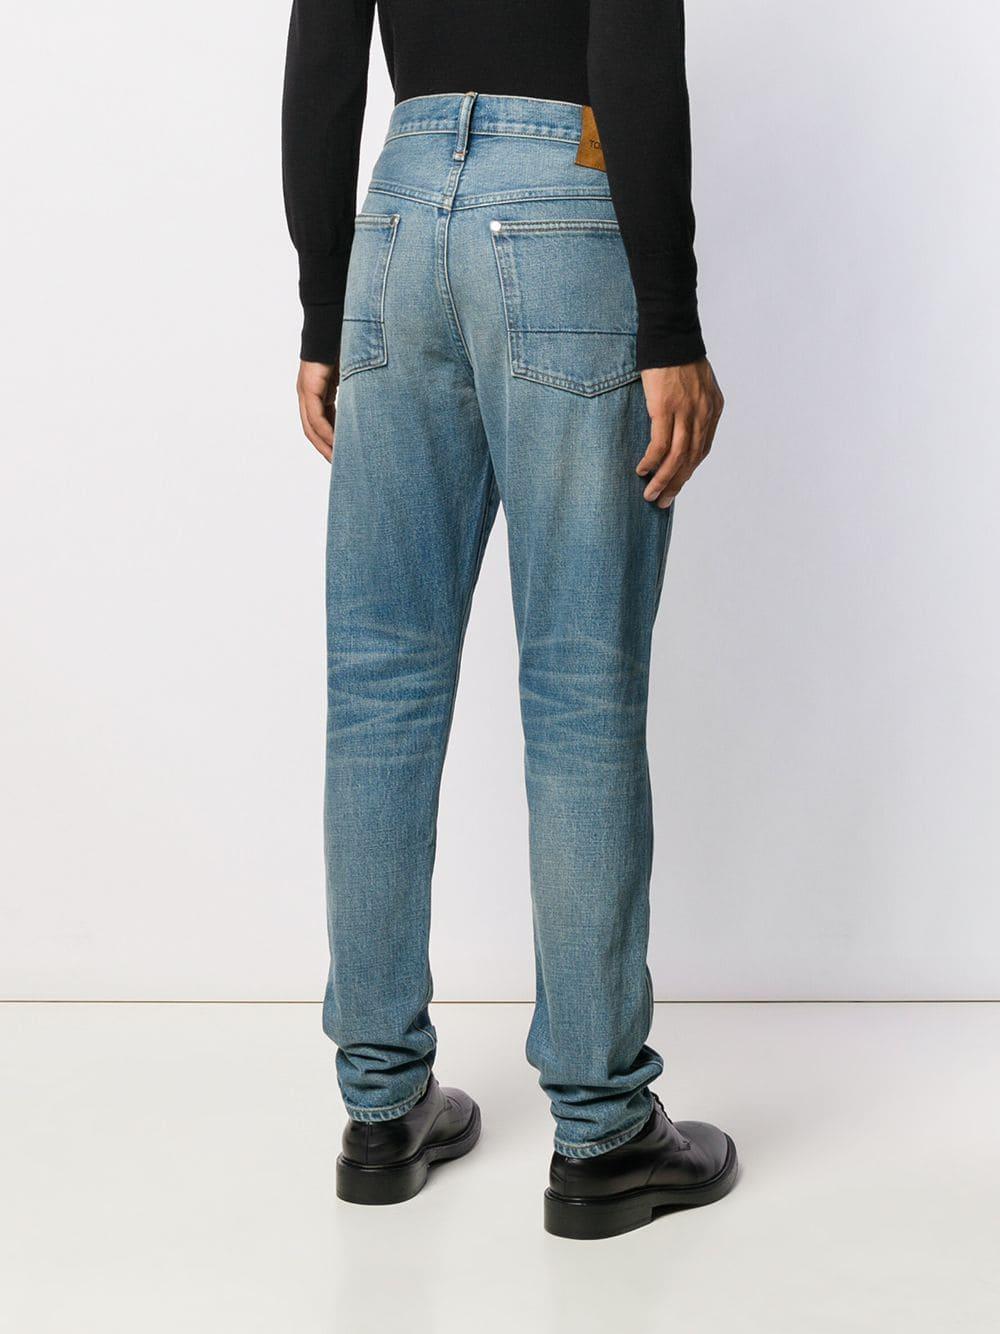 Tom Ford Denim Stonewashed Slim-fit Jeans in Blue for Men - Lyst